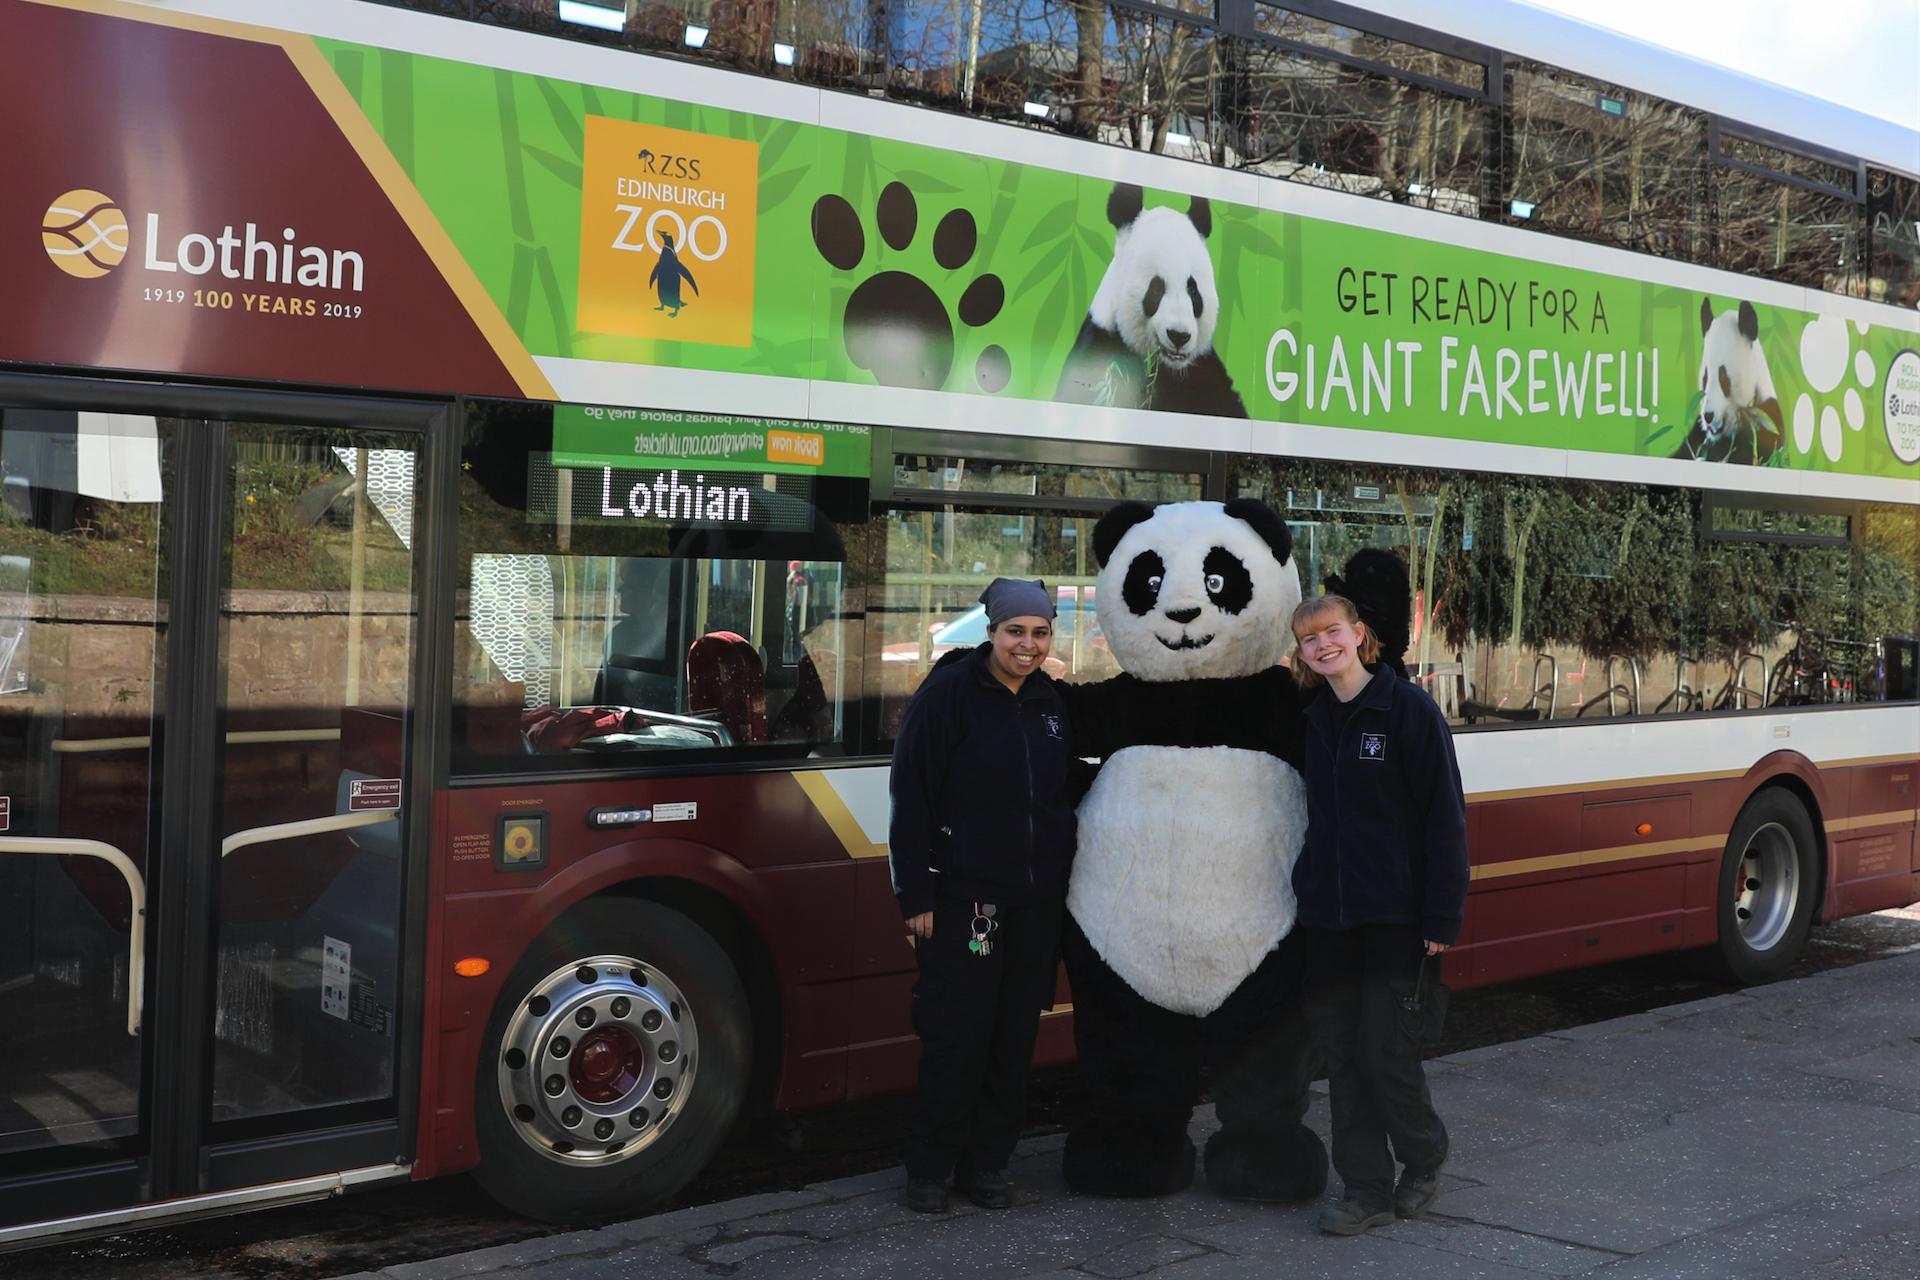 Carnivore keepers and panda mascot pose smiling beside giant panda farewell Lothian bus 

Image: 2023